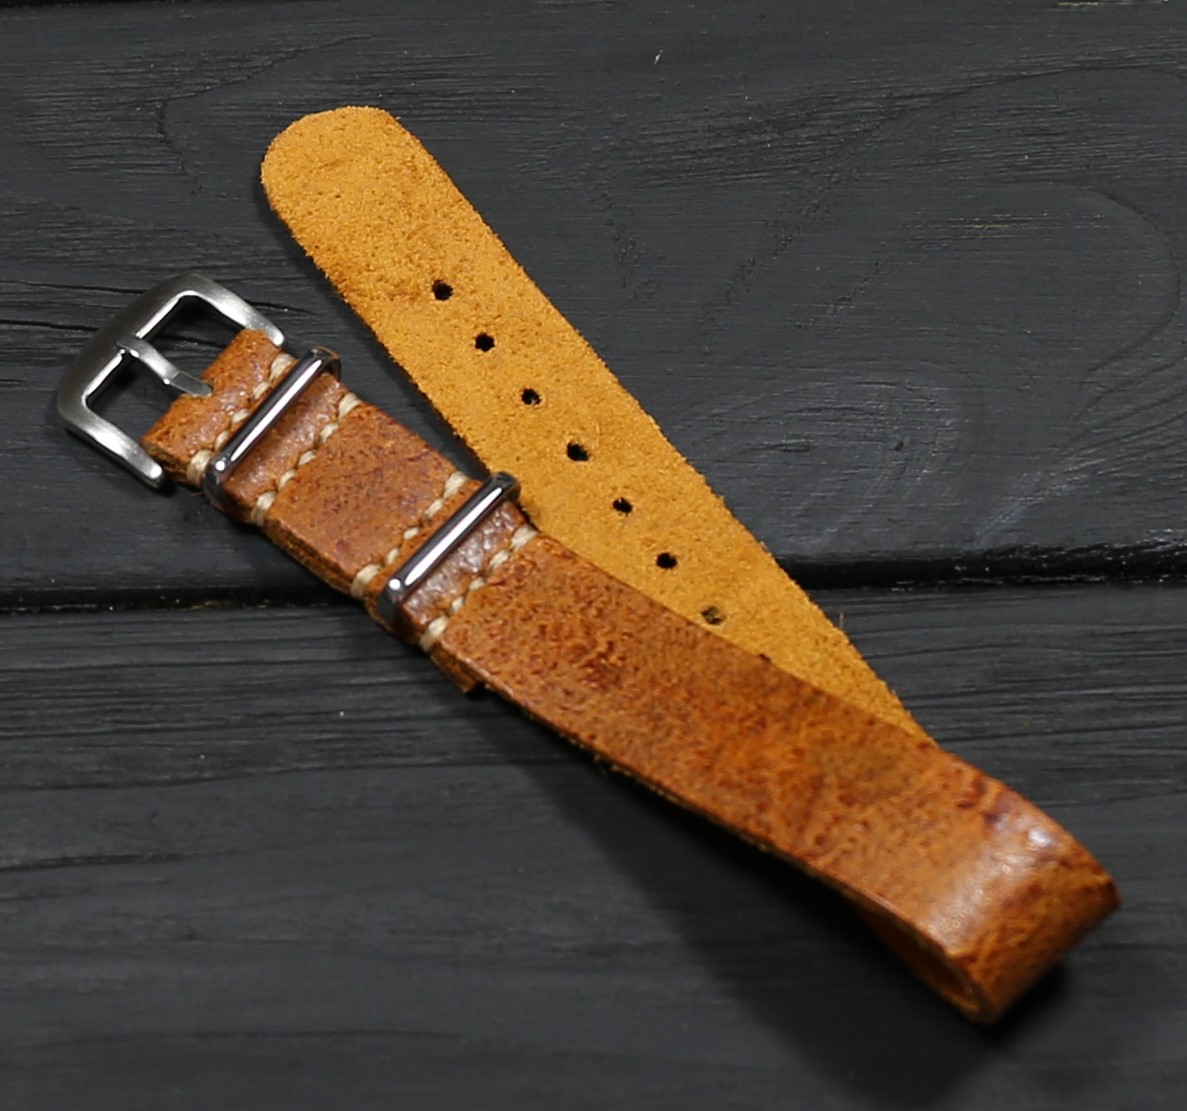 Custom Vachetta leather watch band, Brown Cow leather watch strap SW136